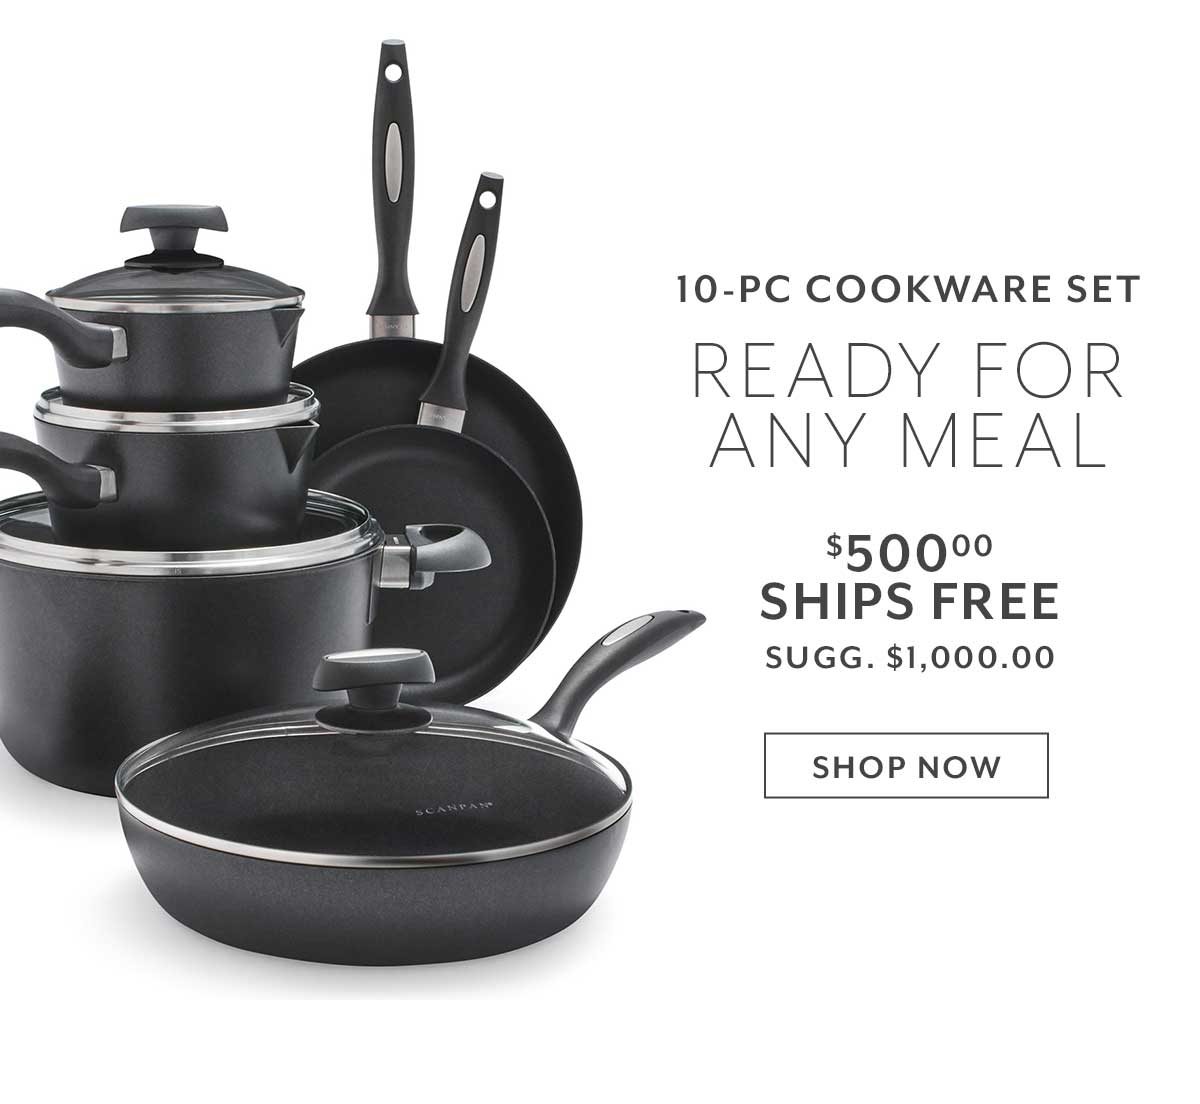 10-Pc Cookware Set